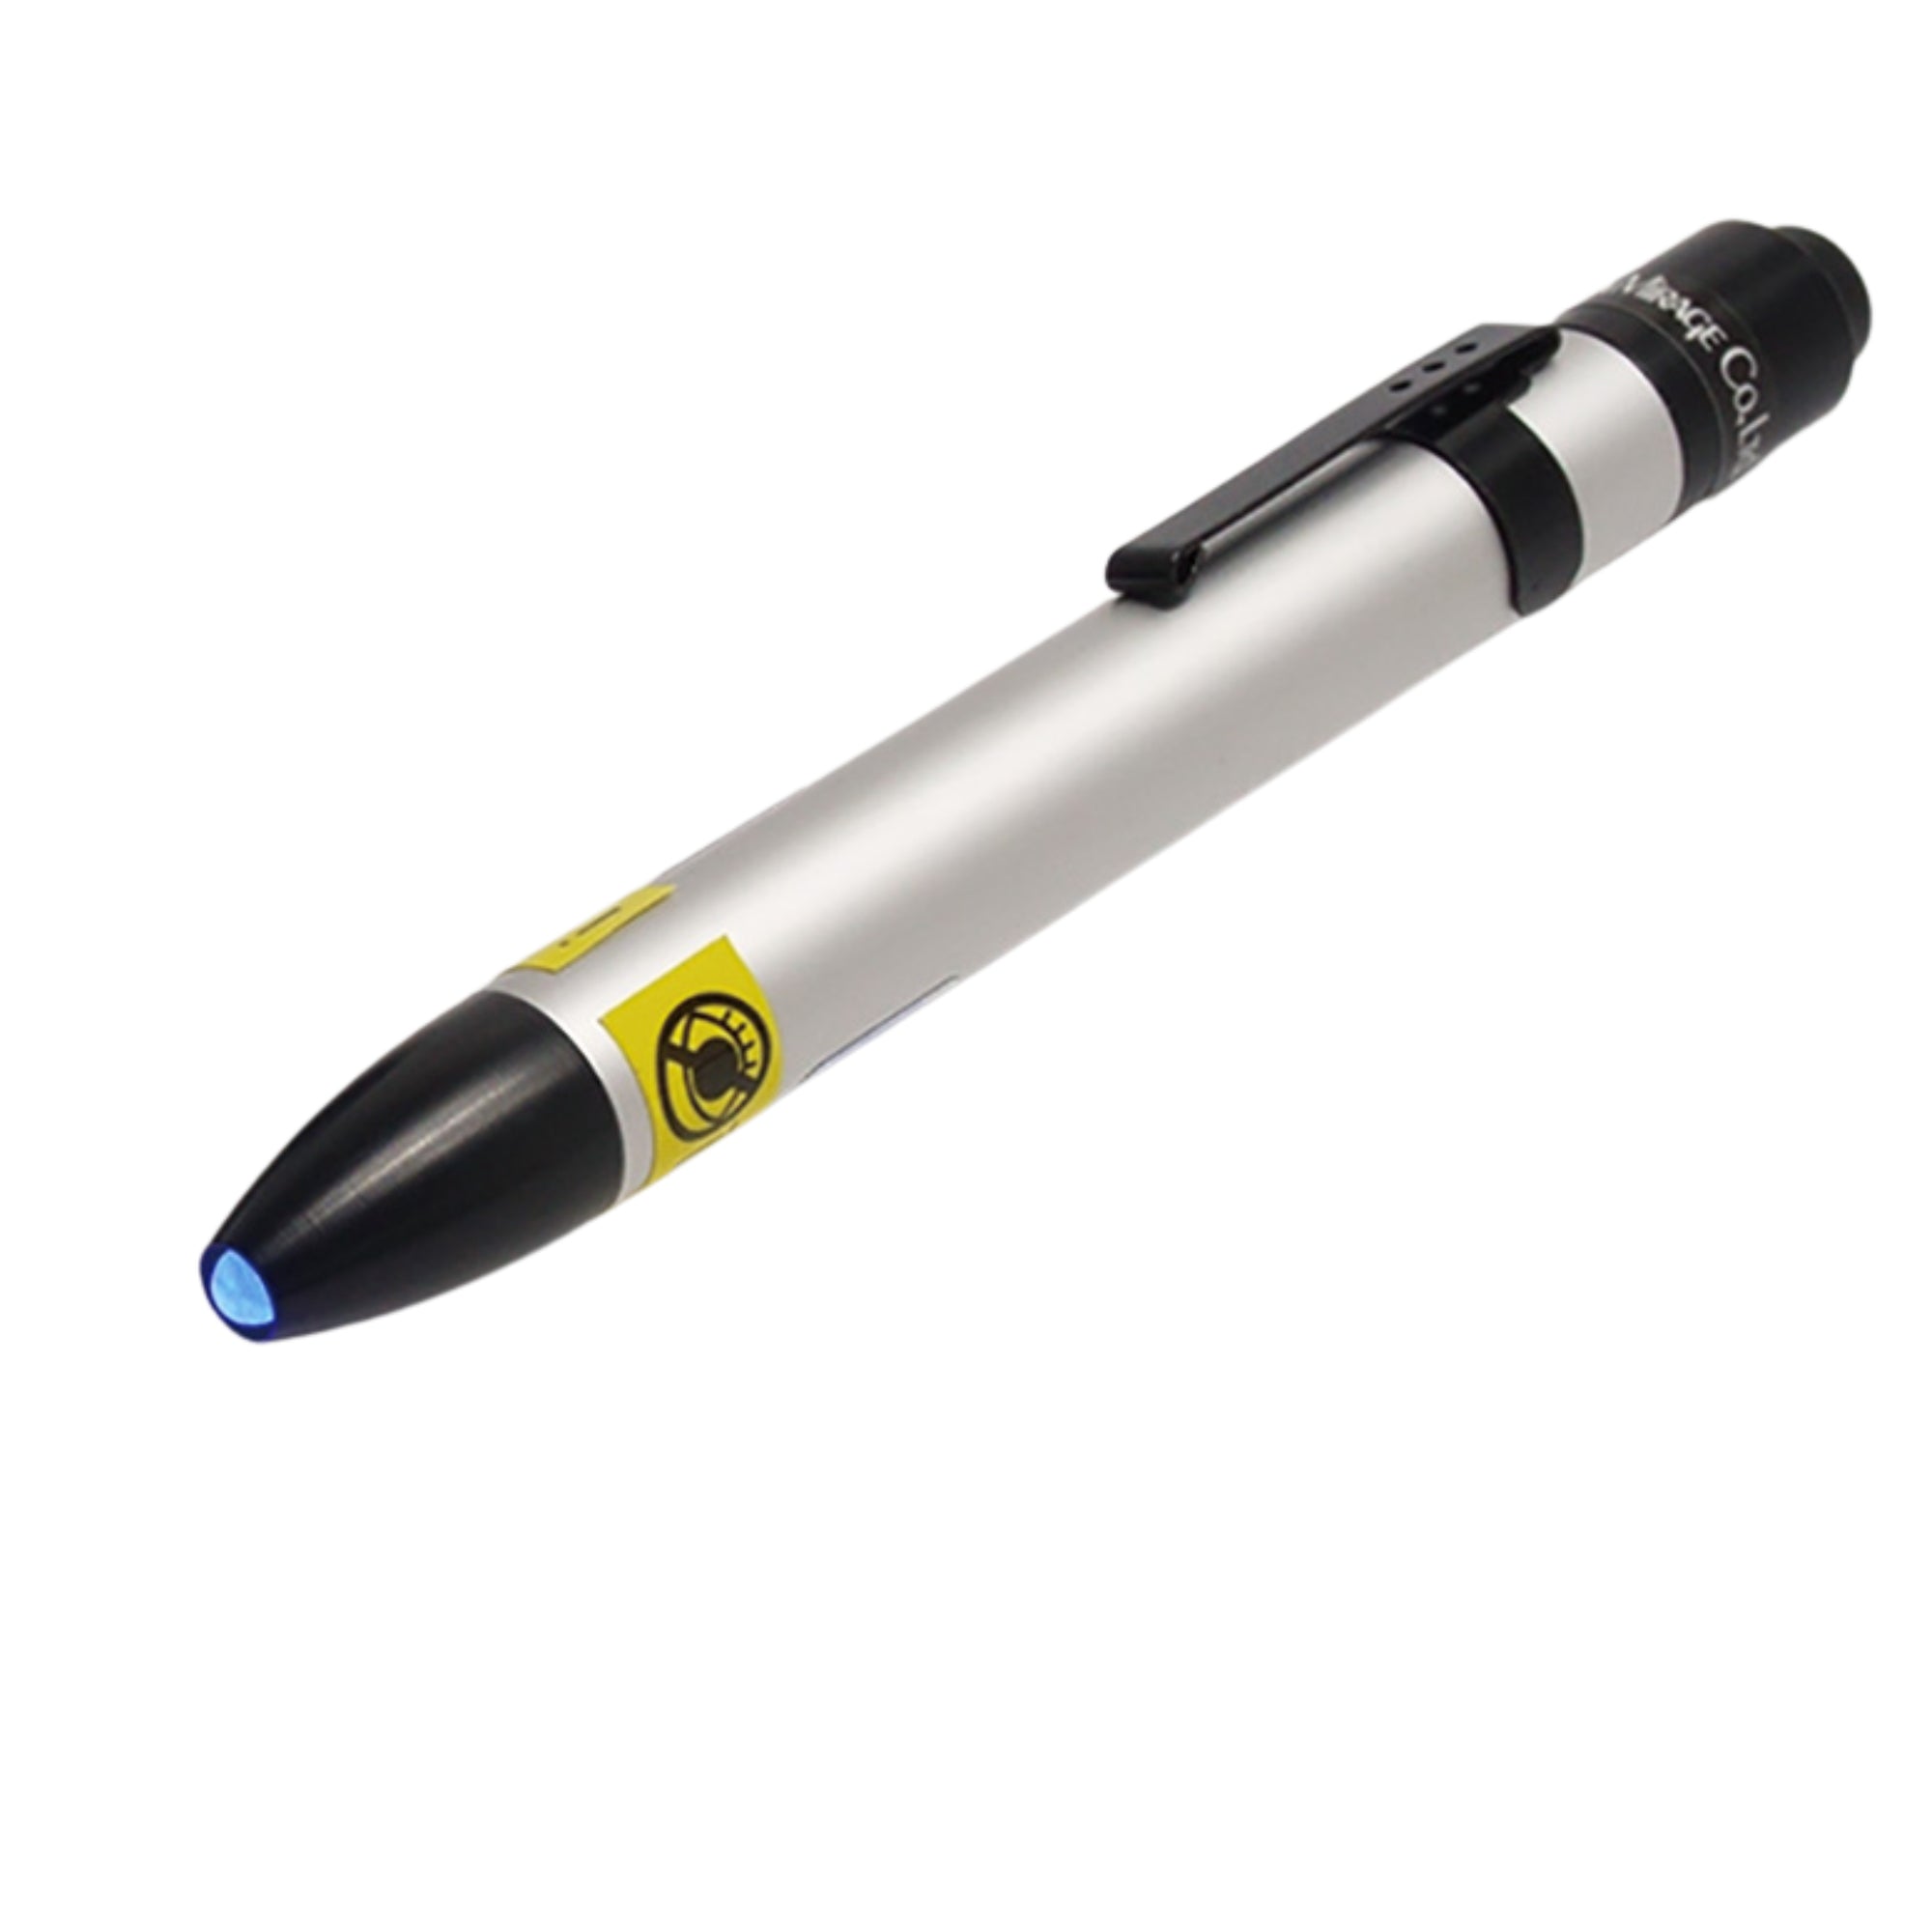 Portable small LW UV flashlight Pen Size by Alfa Mirage